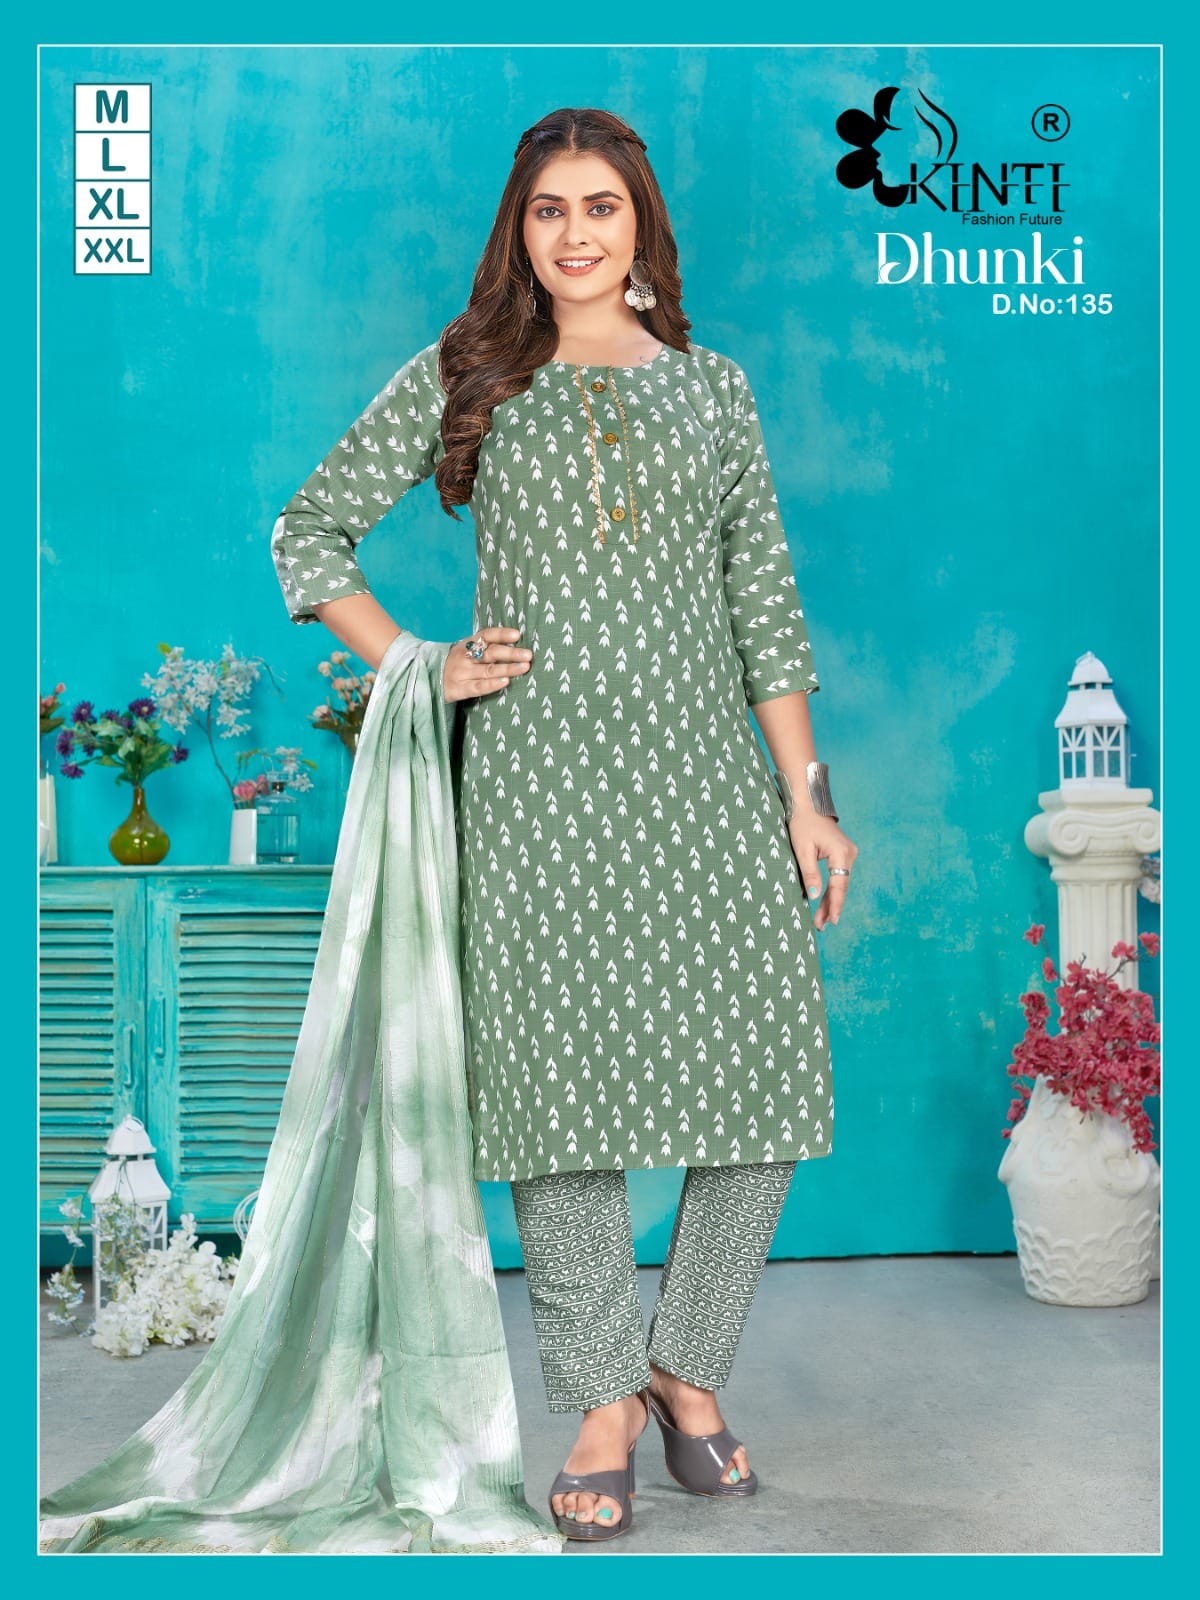 Plain Georgette Dhunki Ladies Western Designer Top, Size: M,XL at Rs  259/piece in Surat